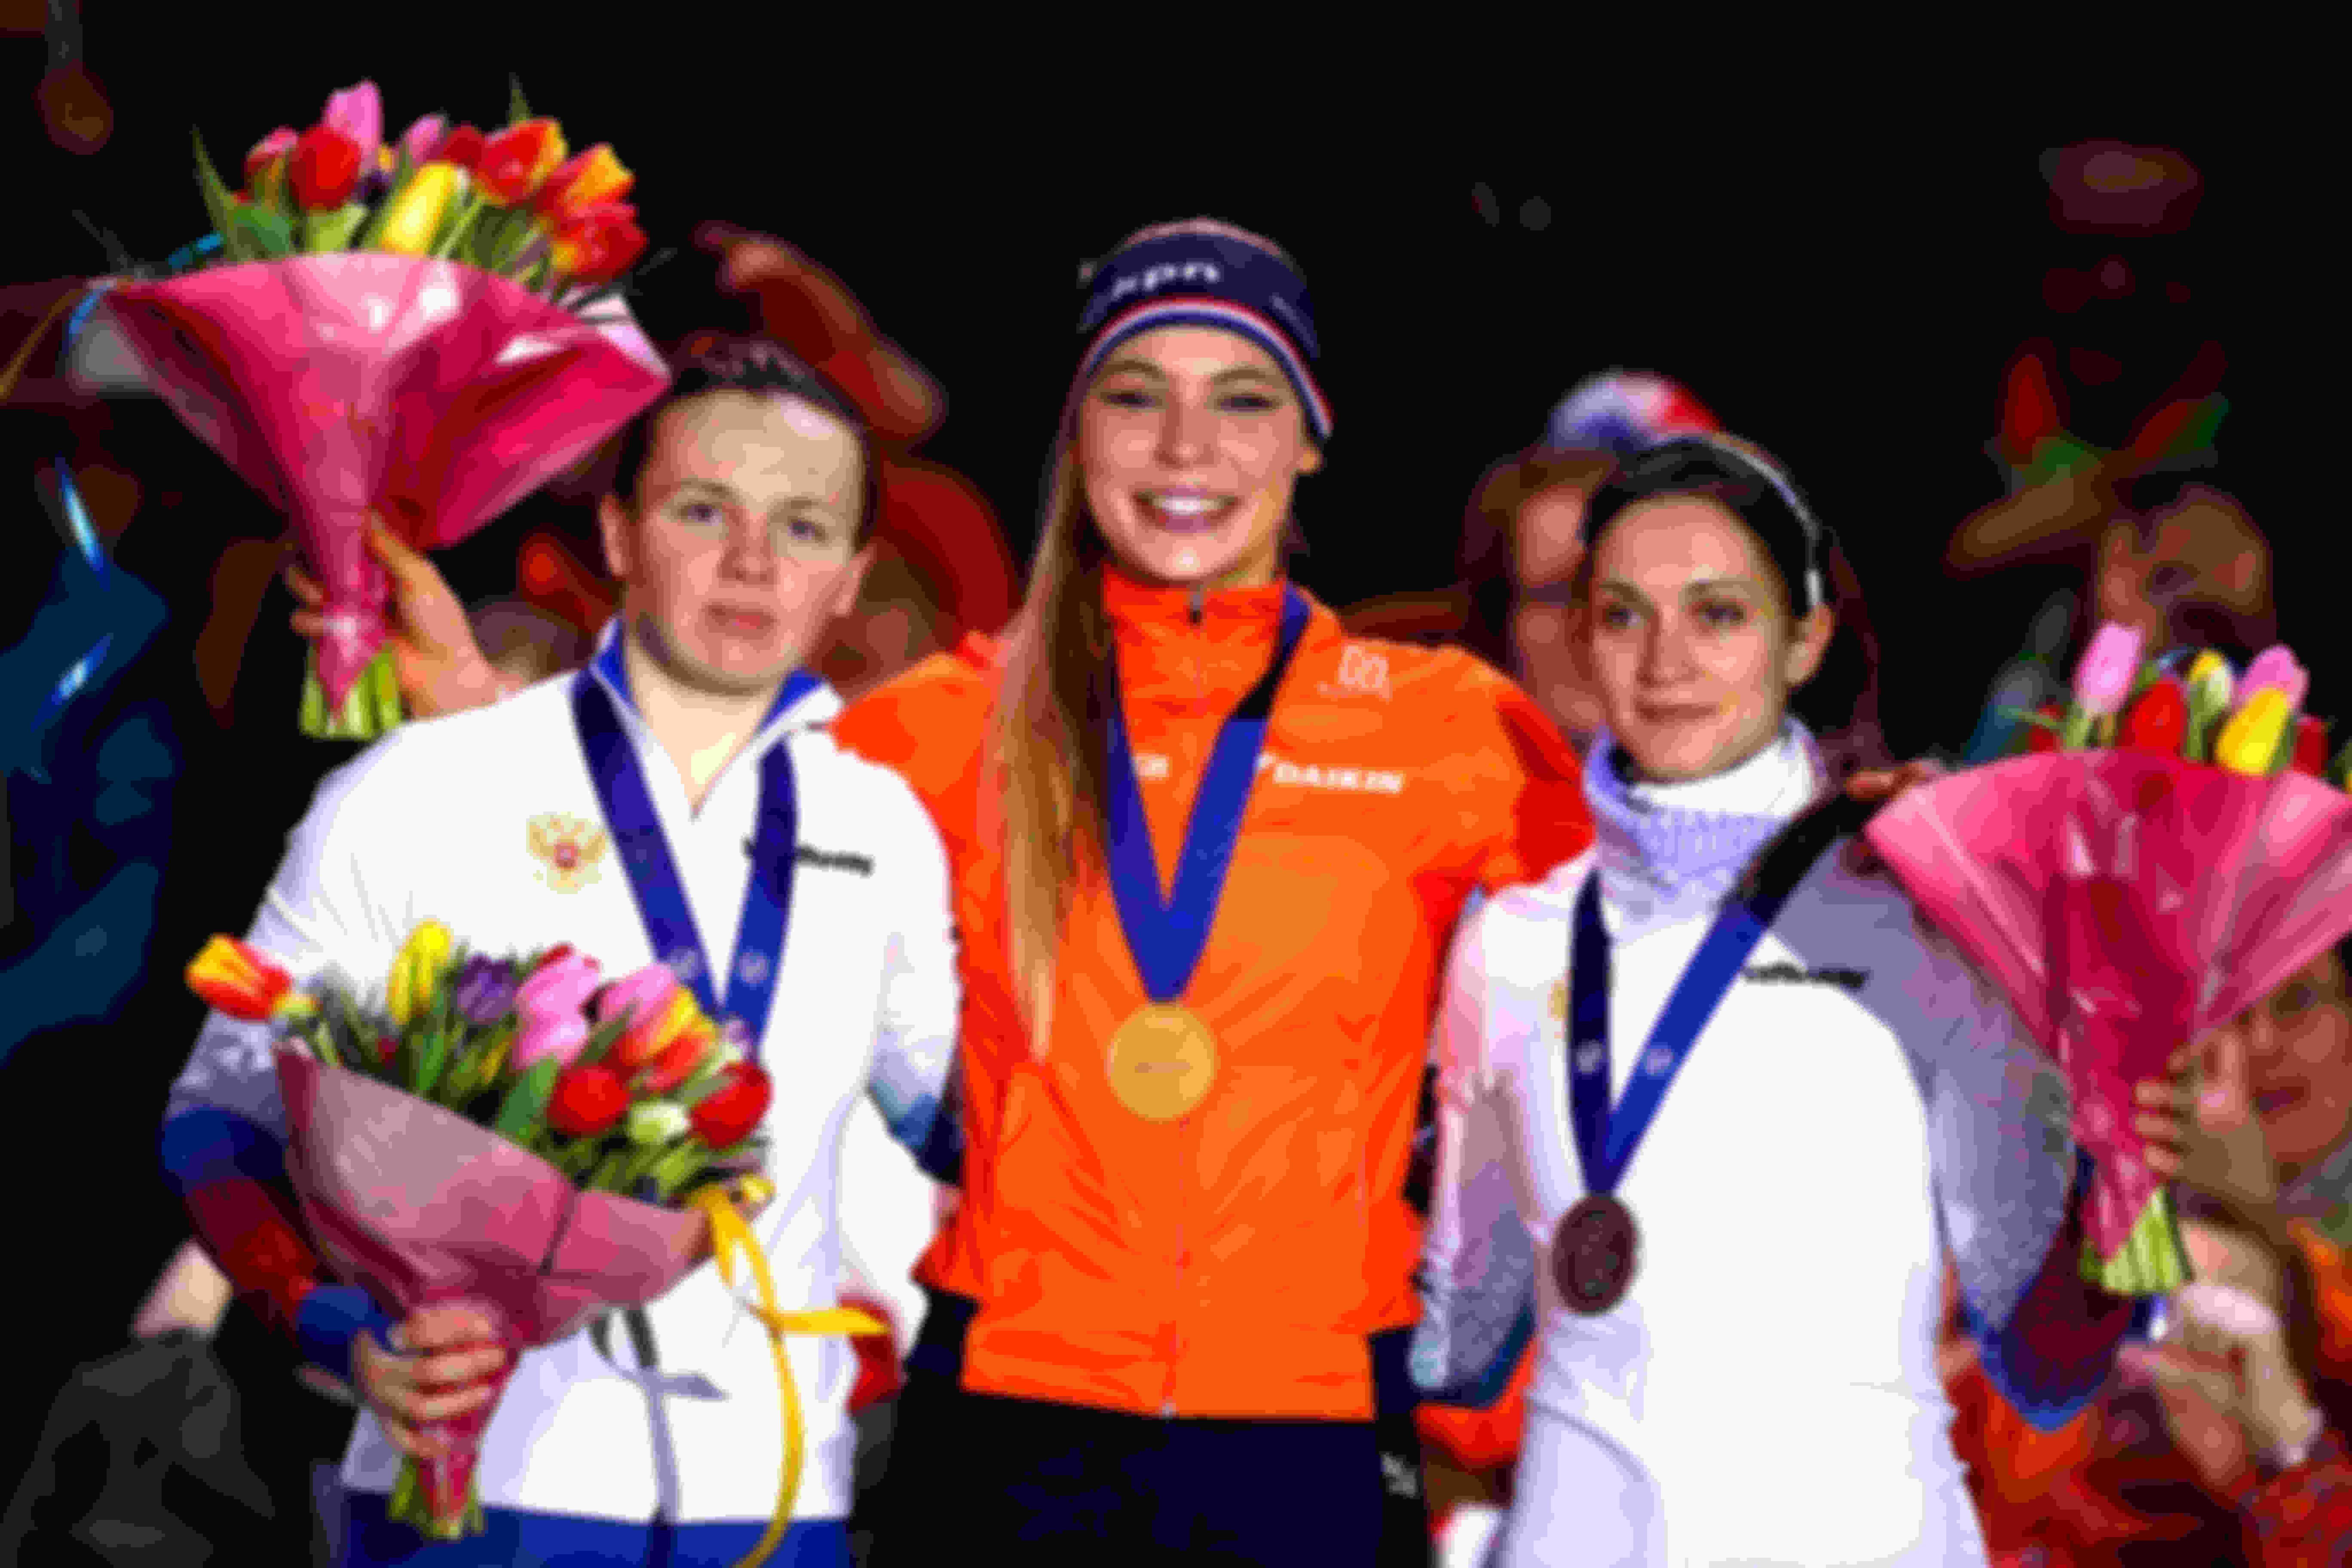 Jutta Leerdam won 1000m gold at the 2020 ISU European Speed Skating Championships in Heerenveen, Netherlands.